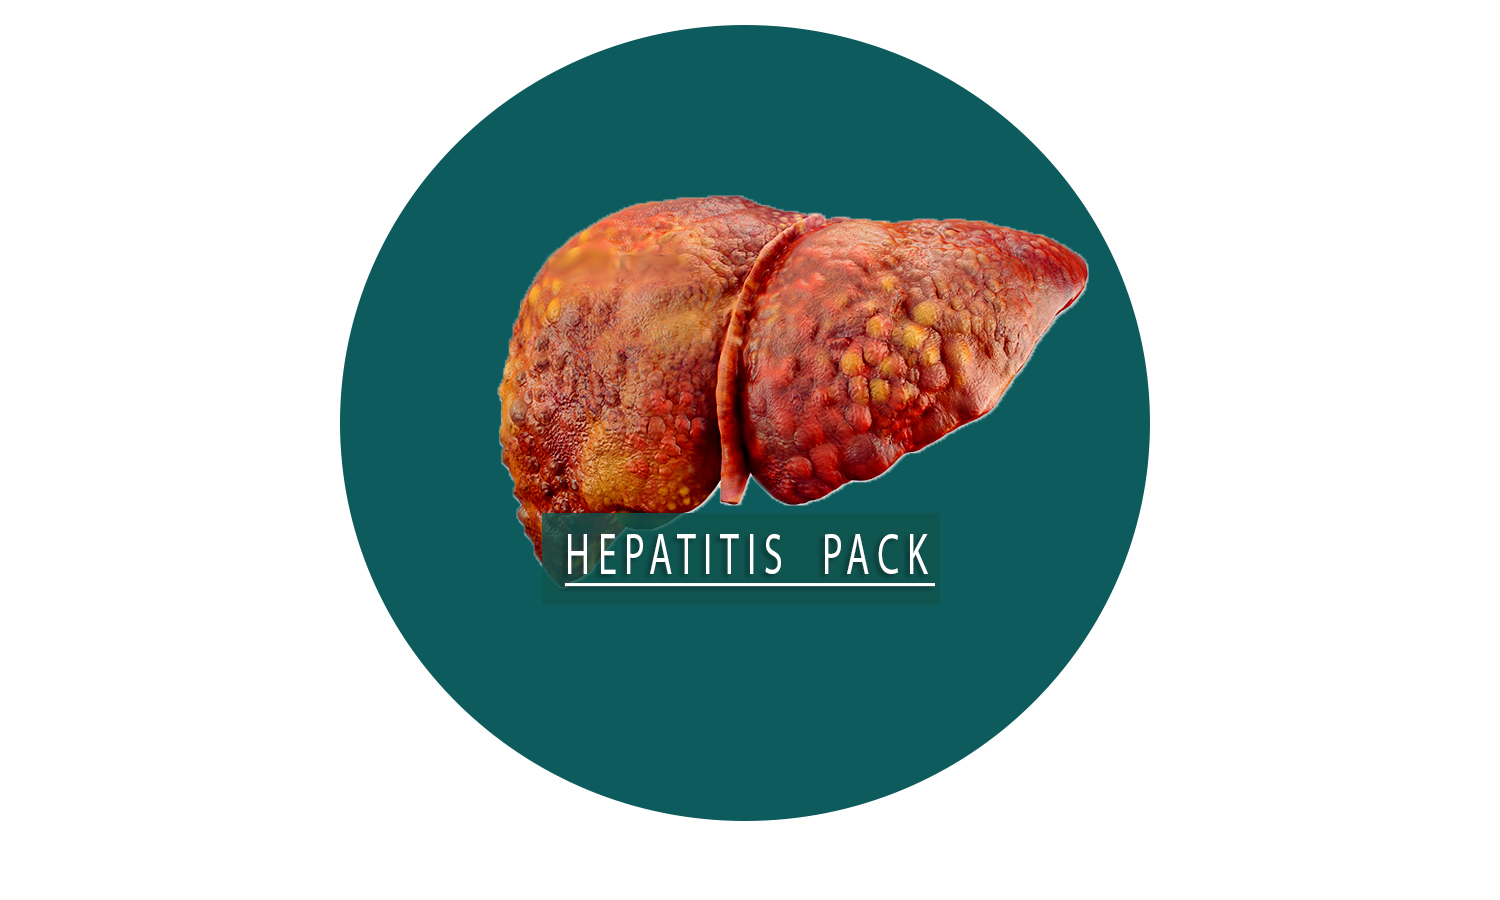 HEPATITIS TREATMENT PACK